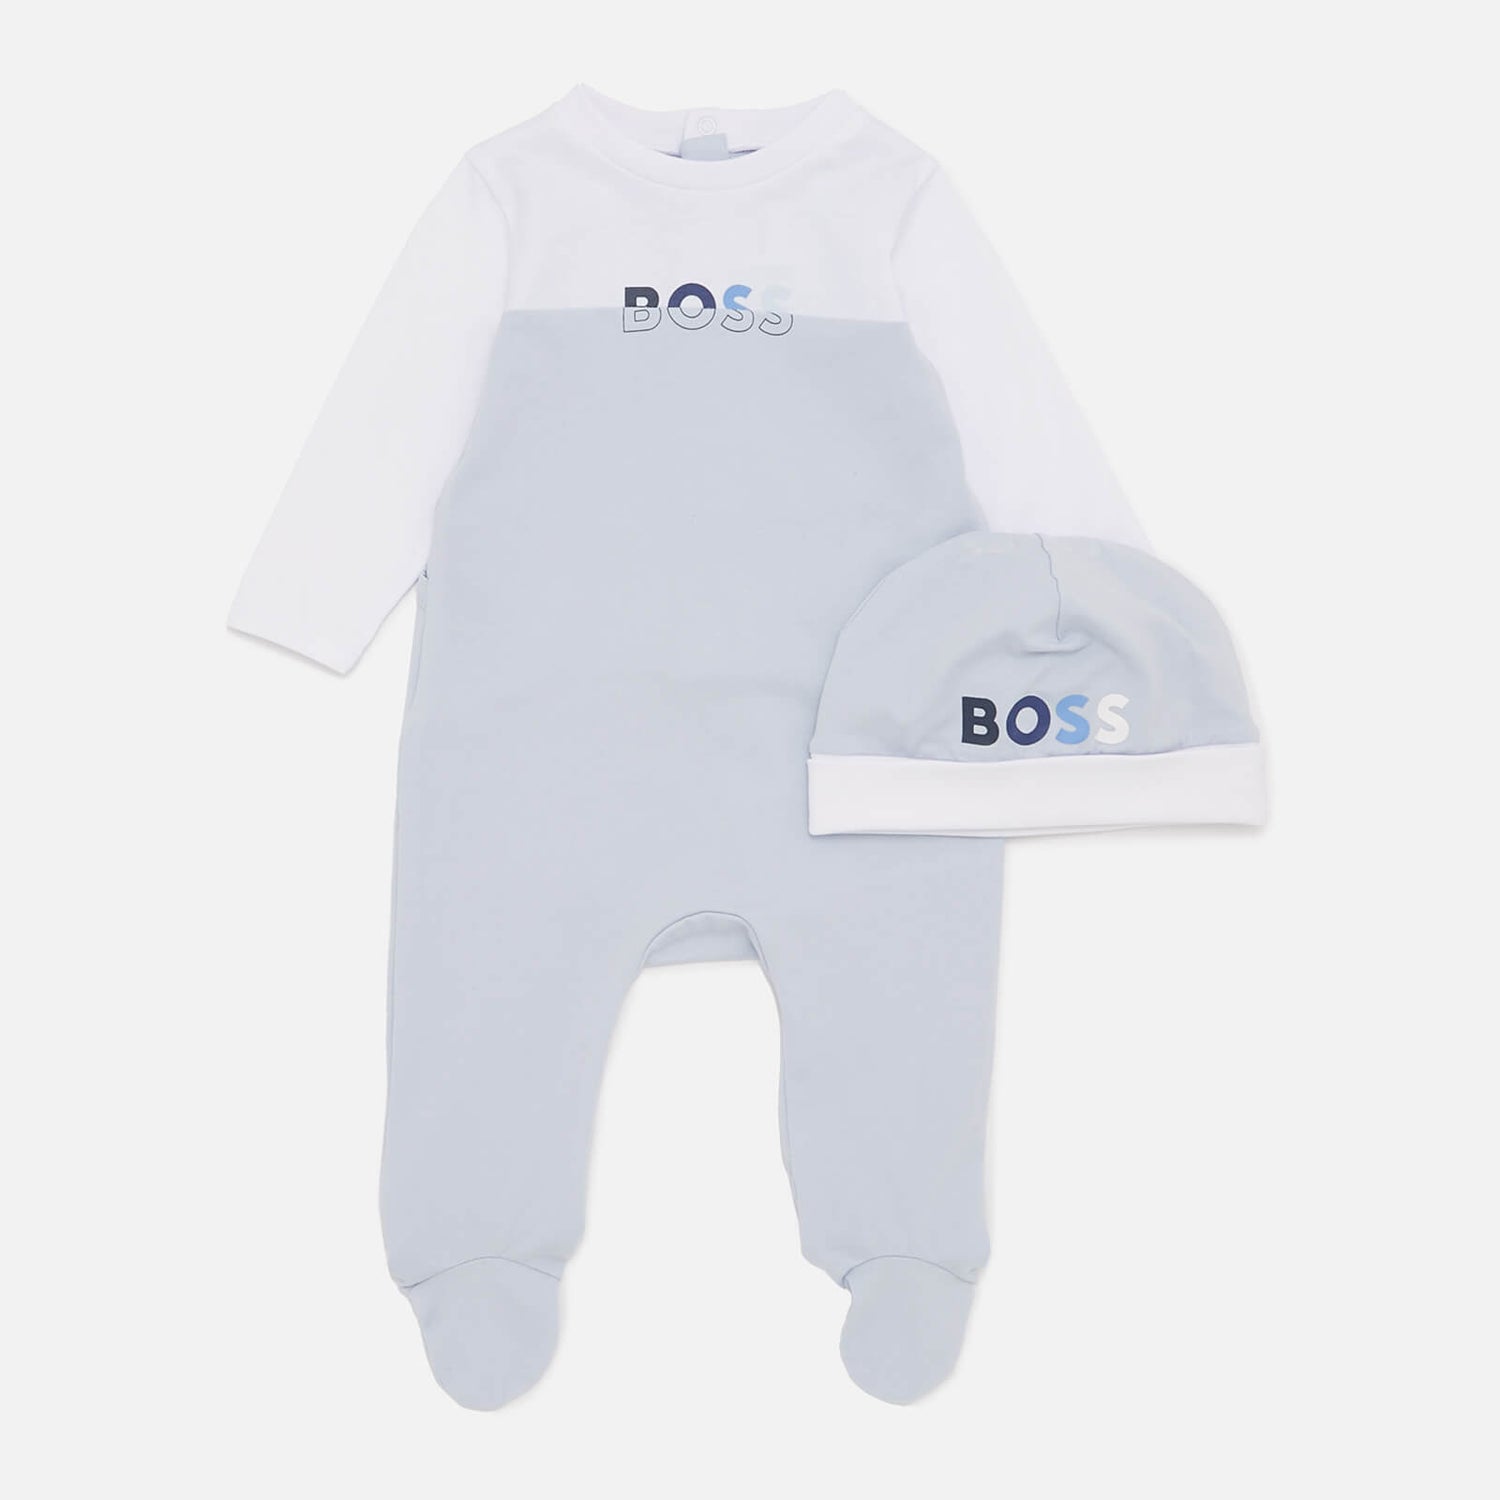 Hugo Boss Boys' Pyjama and Hat Set - Pale Blue